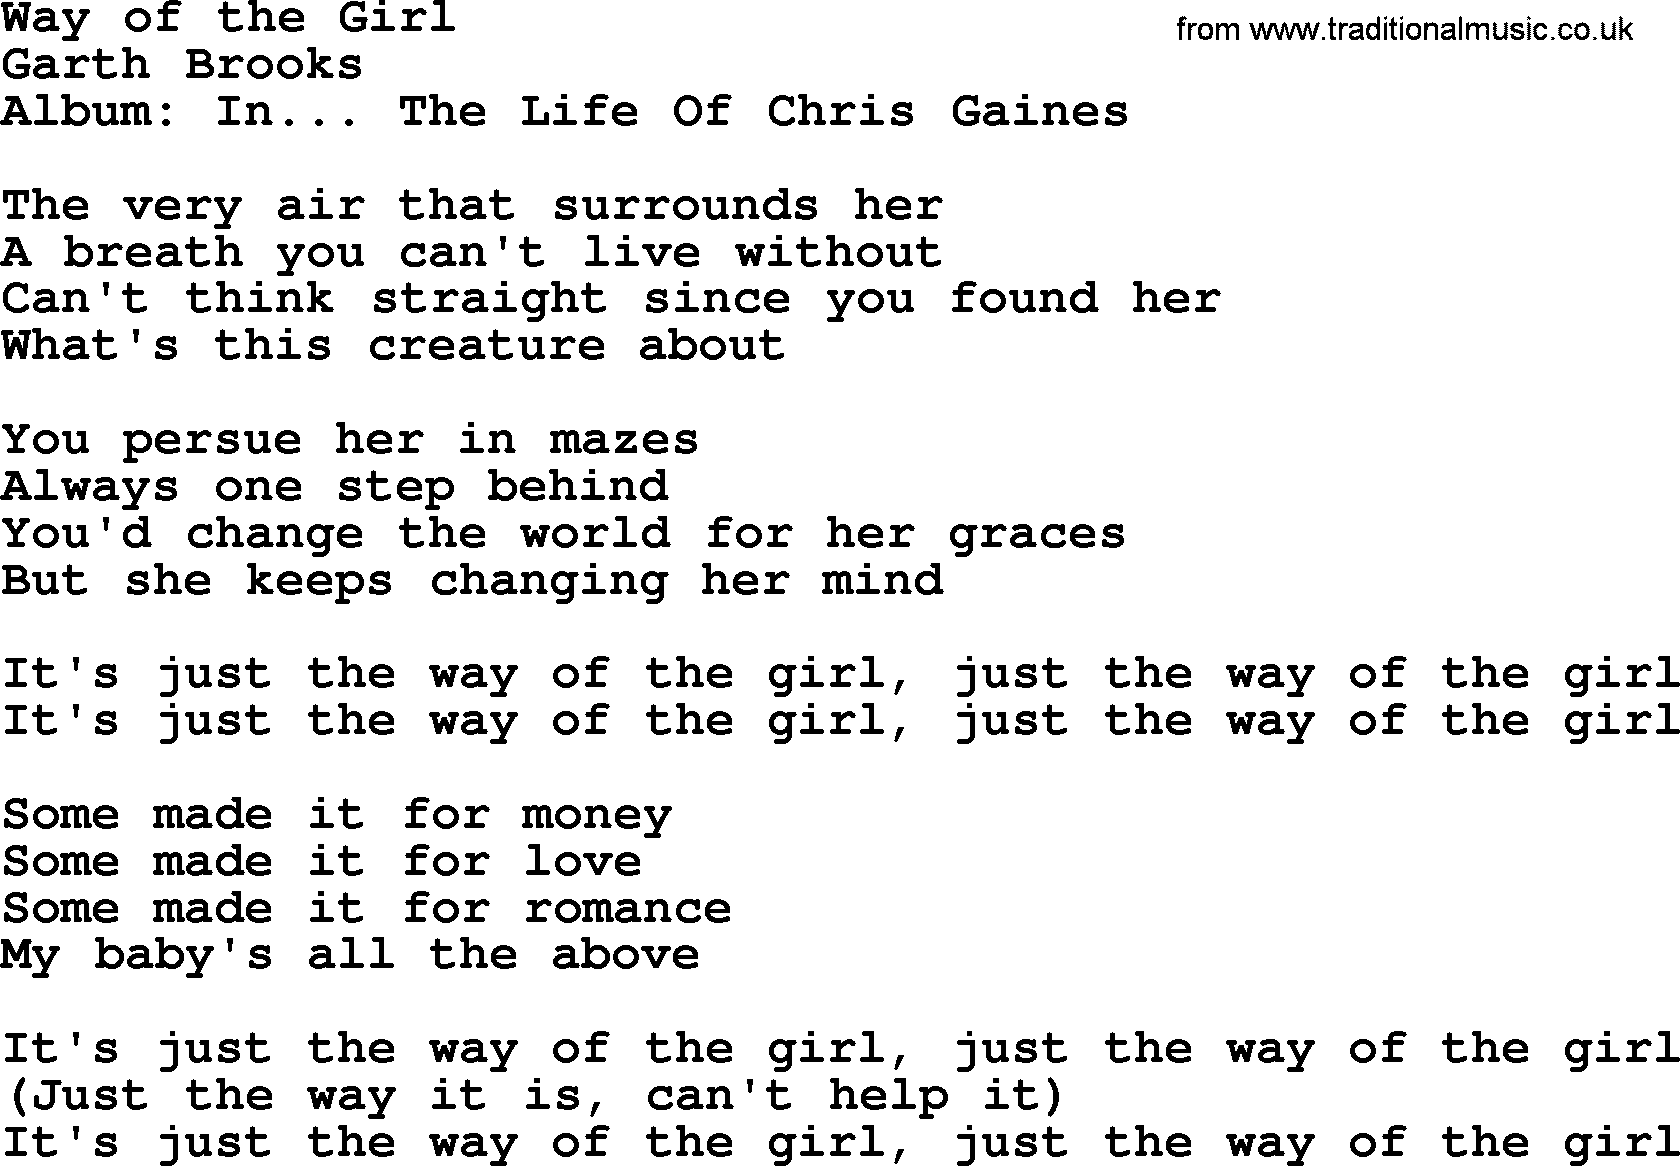 Garth Brooks song: Way Of The Girl, lyrics